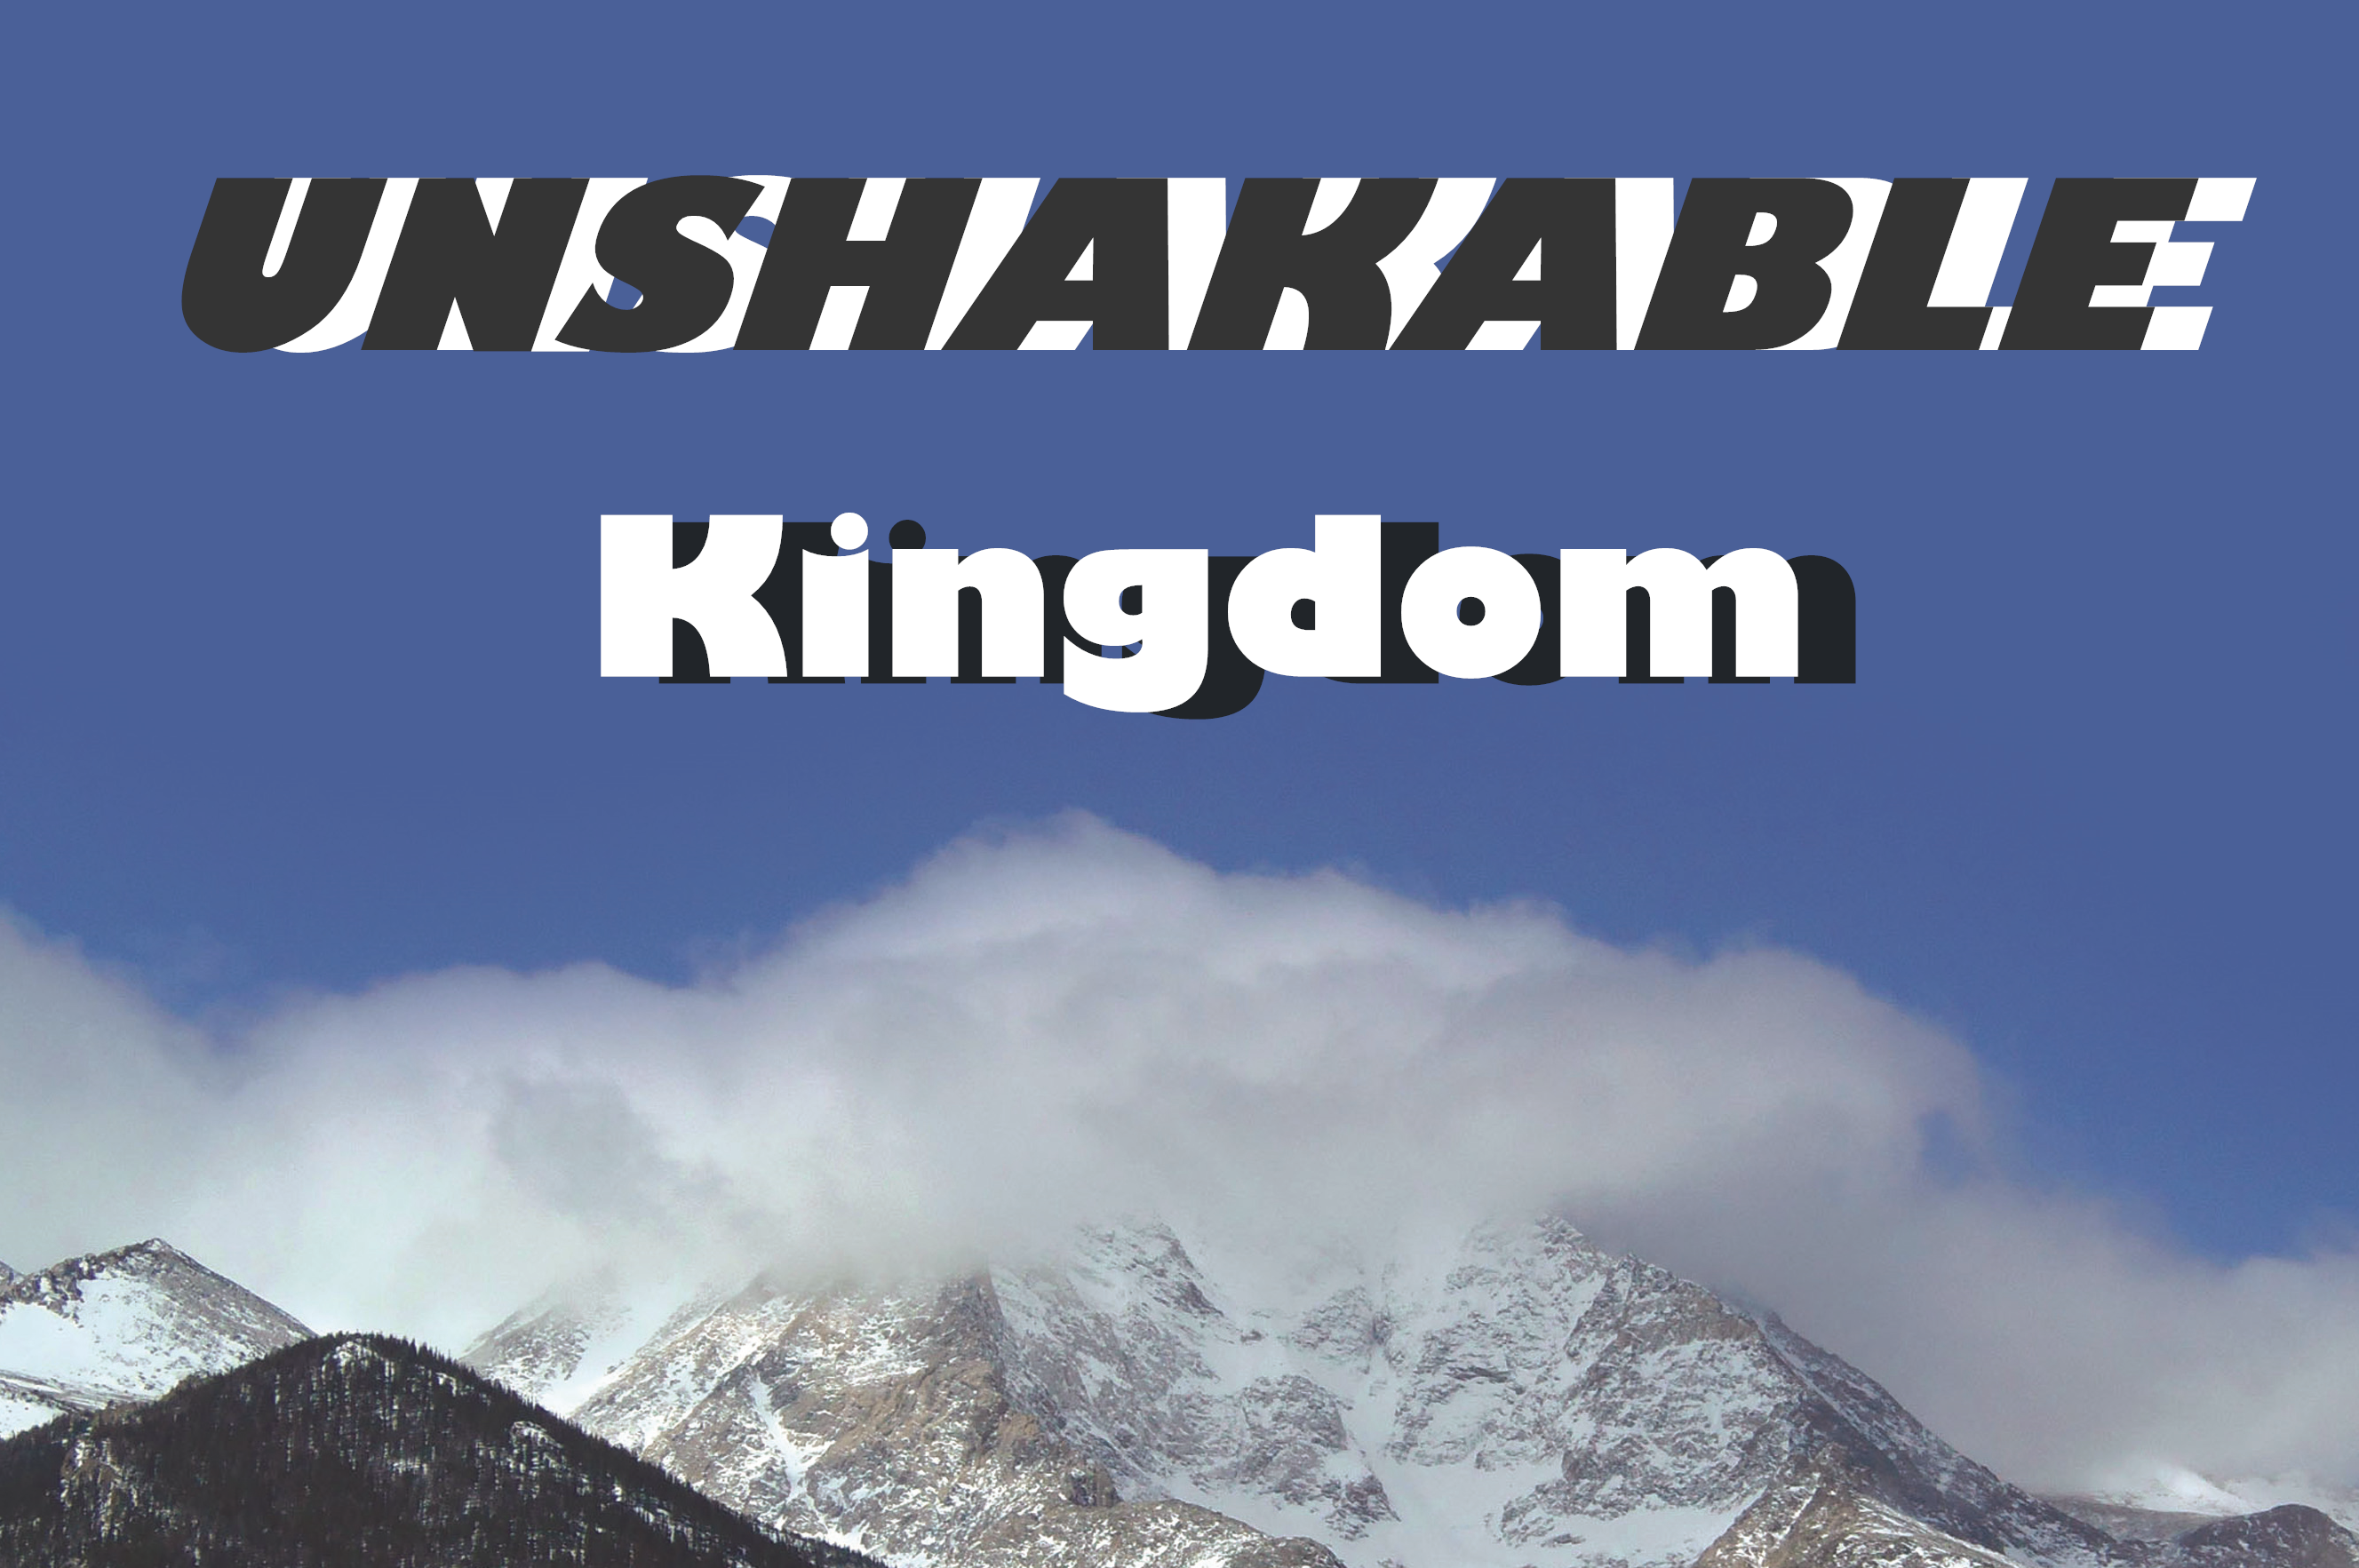 Unshakable Kingdom Part 1